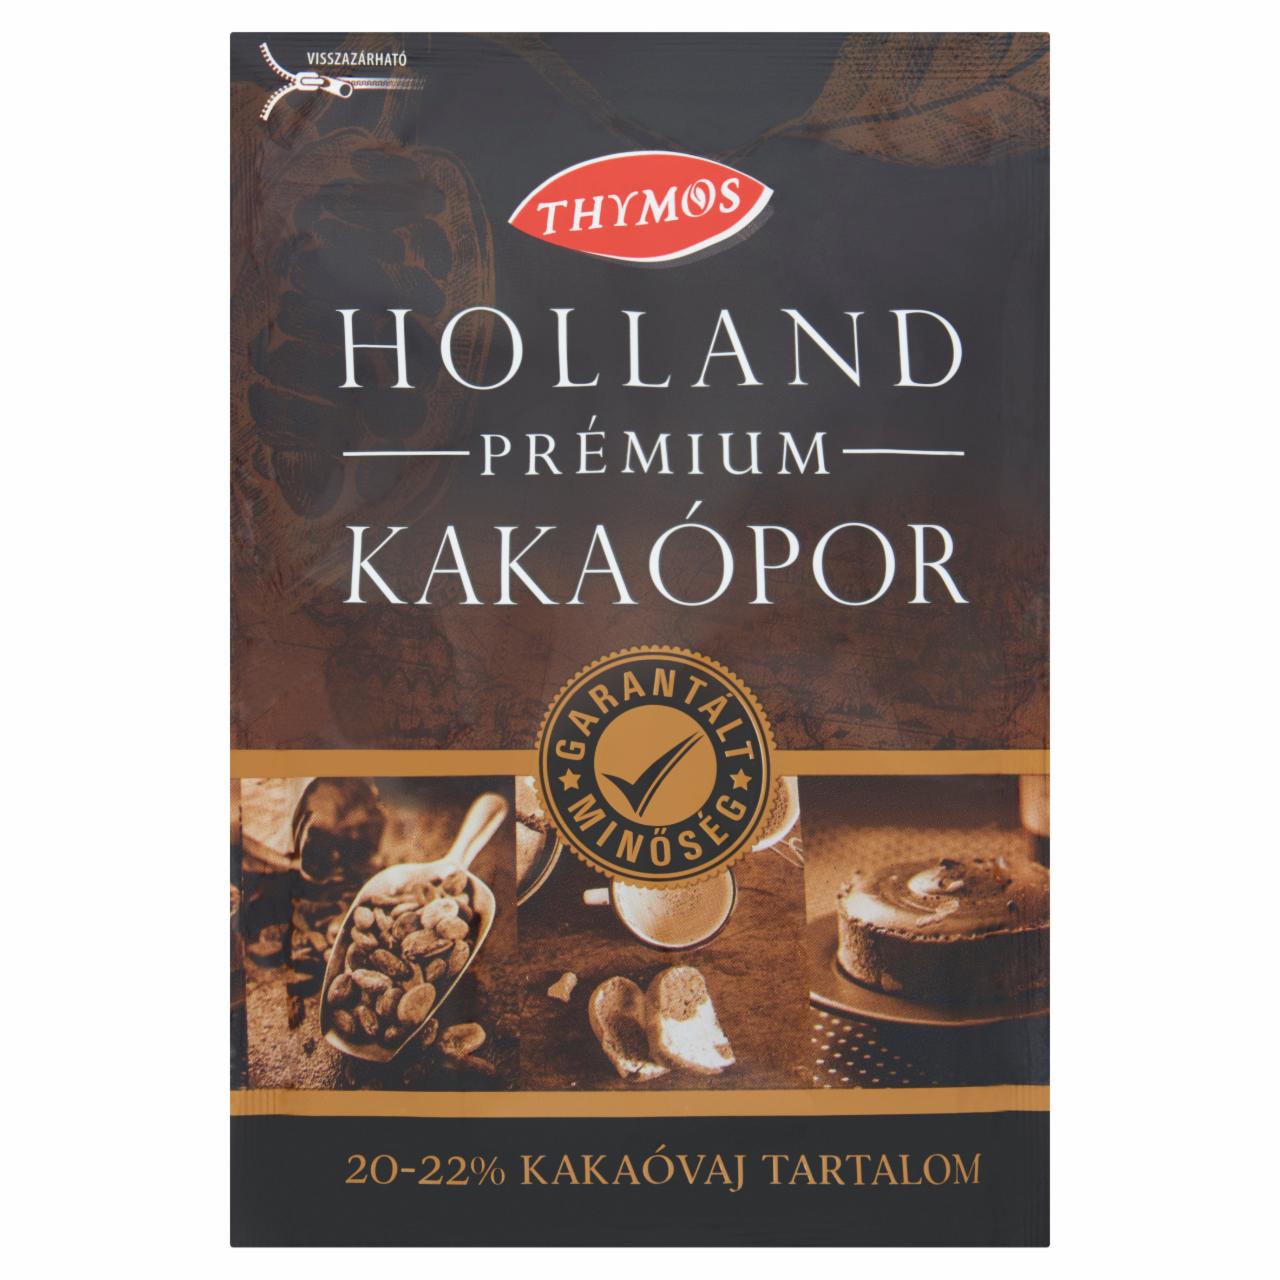 Képek - Thymos holland prémium kakaópor 100 g